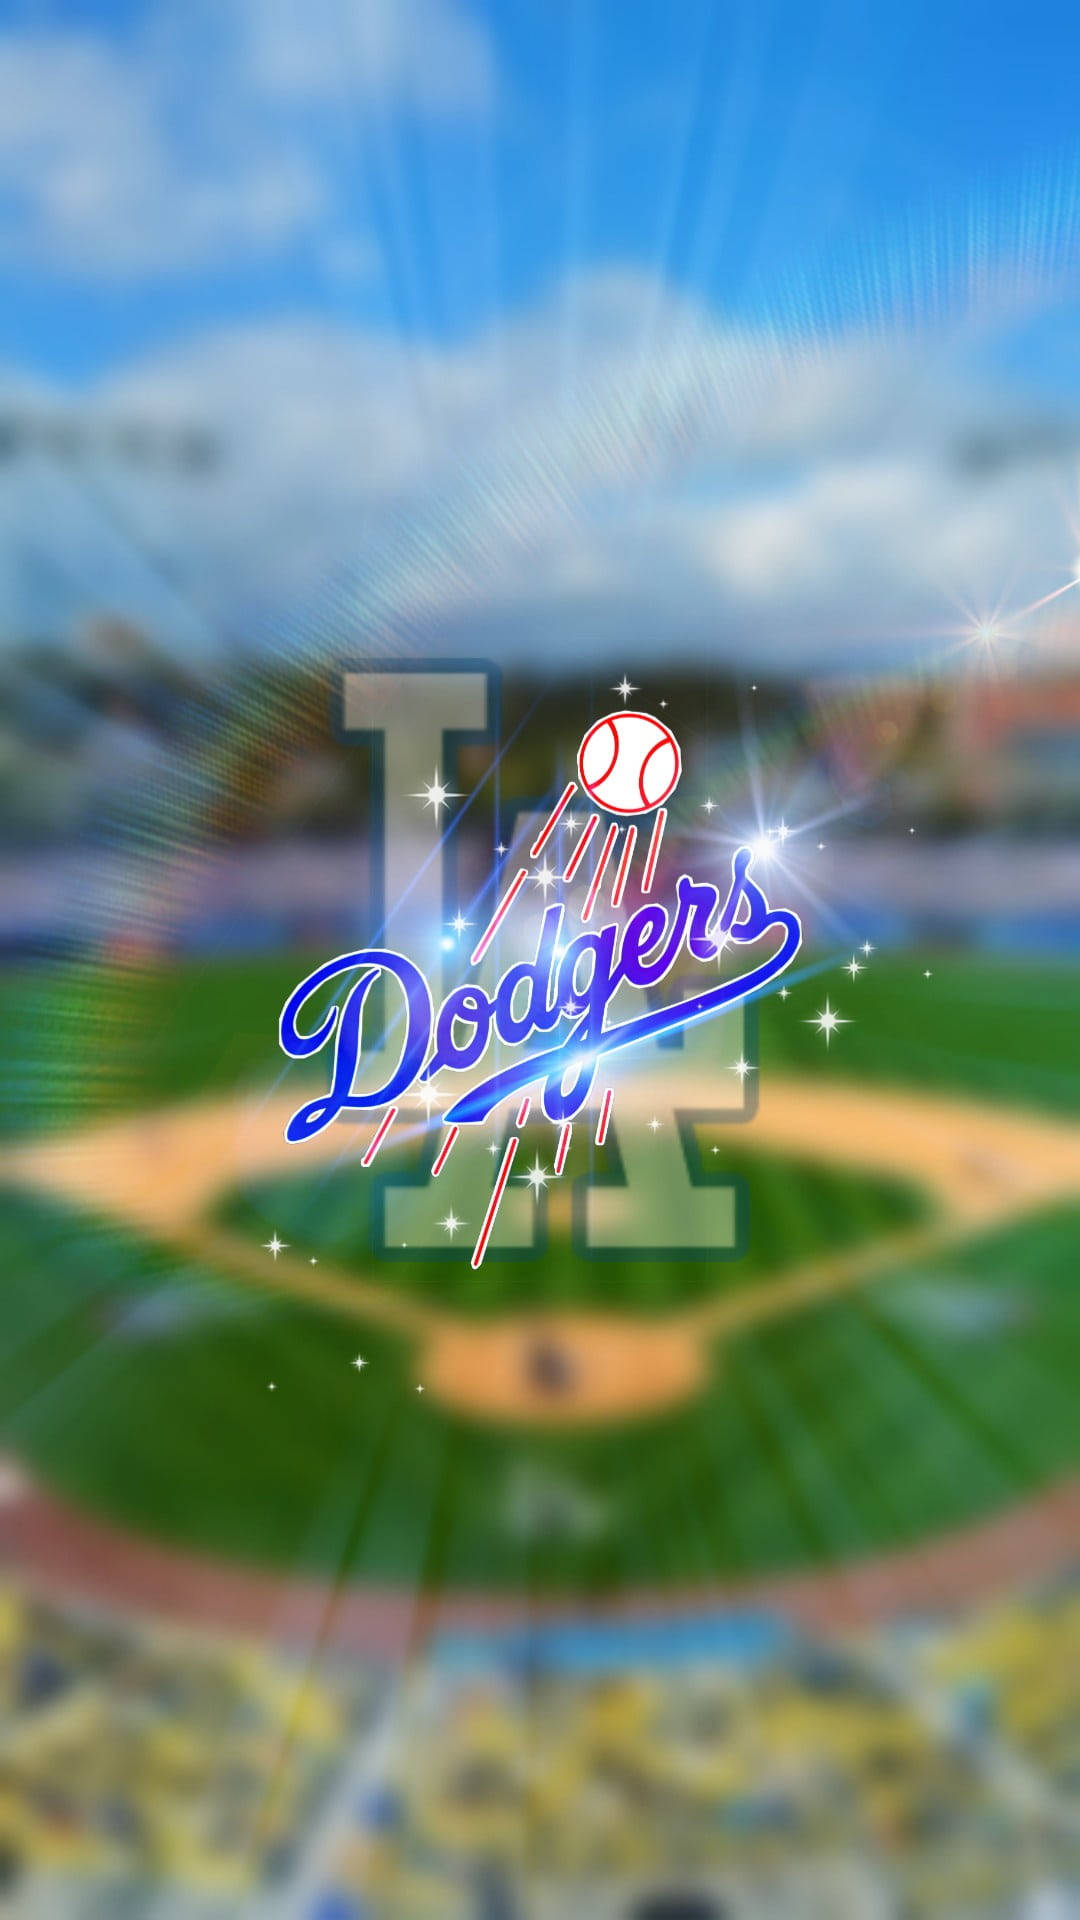 Dodgers wallpaper by DarthBallchinian37  Download on ZEDGE  2516